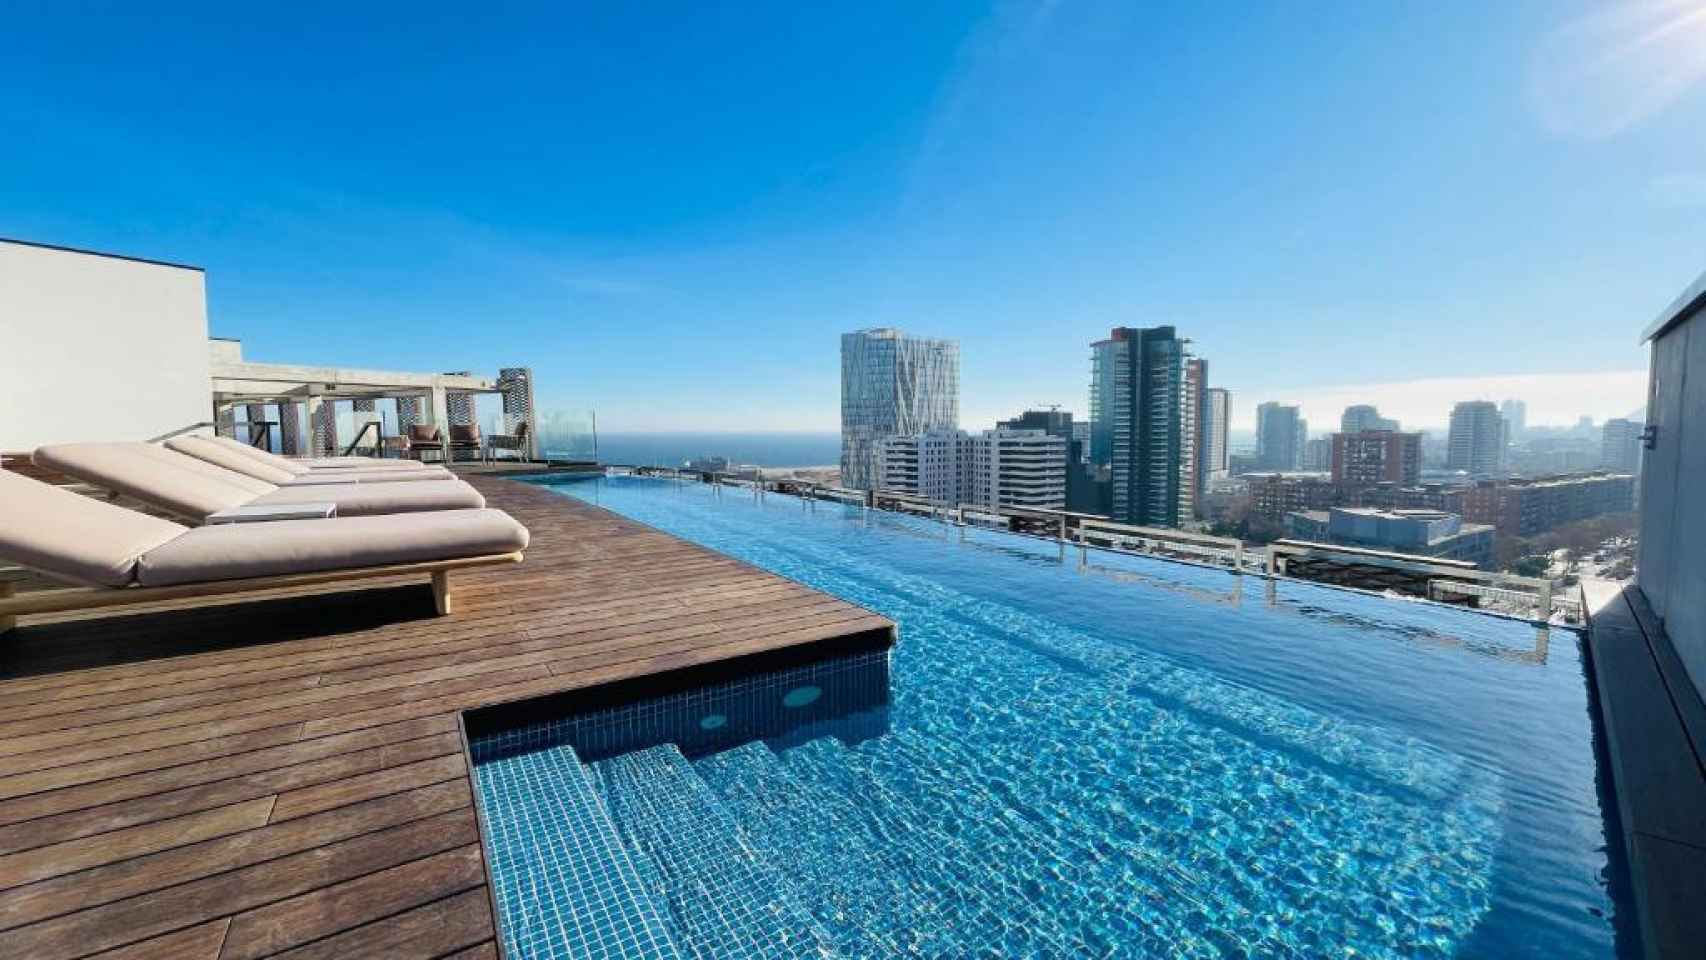 La terraza con piscina del hotel Tembo Barcelona de la cadena Preferred